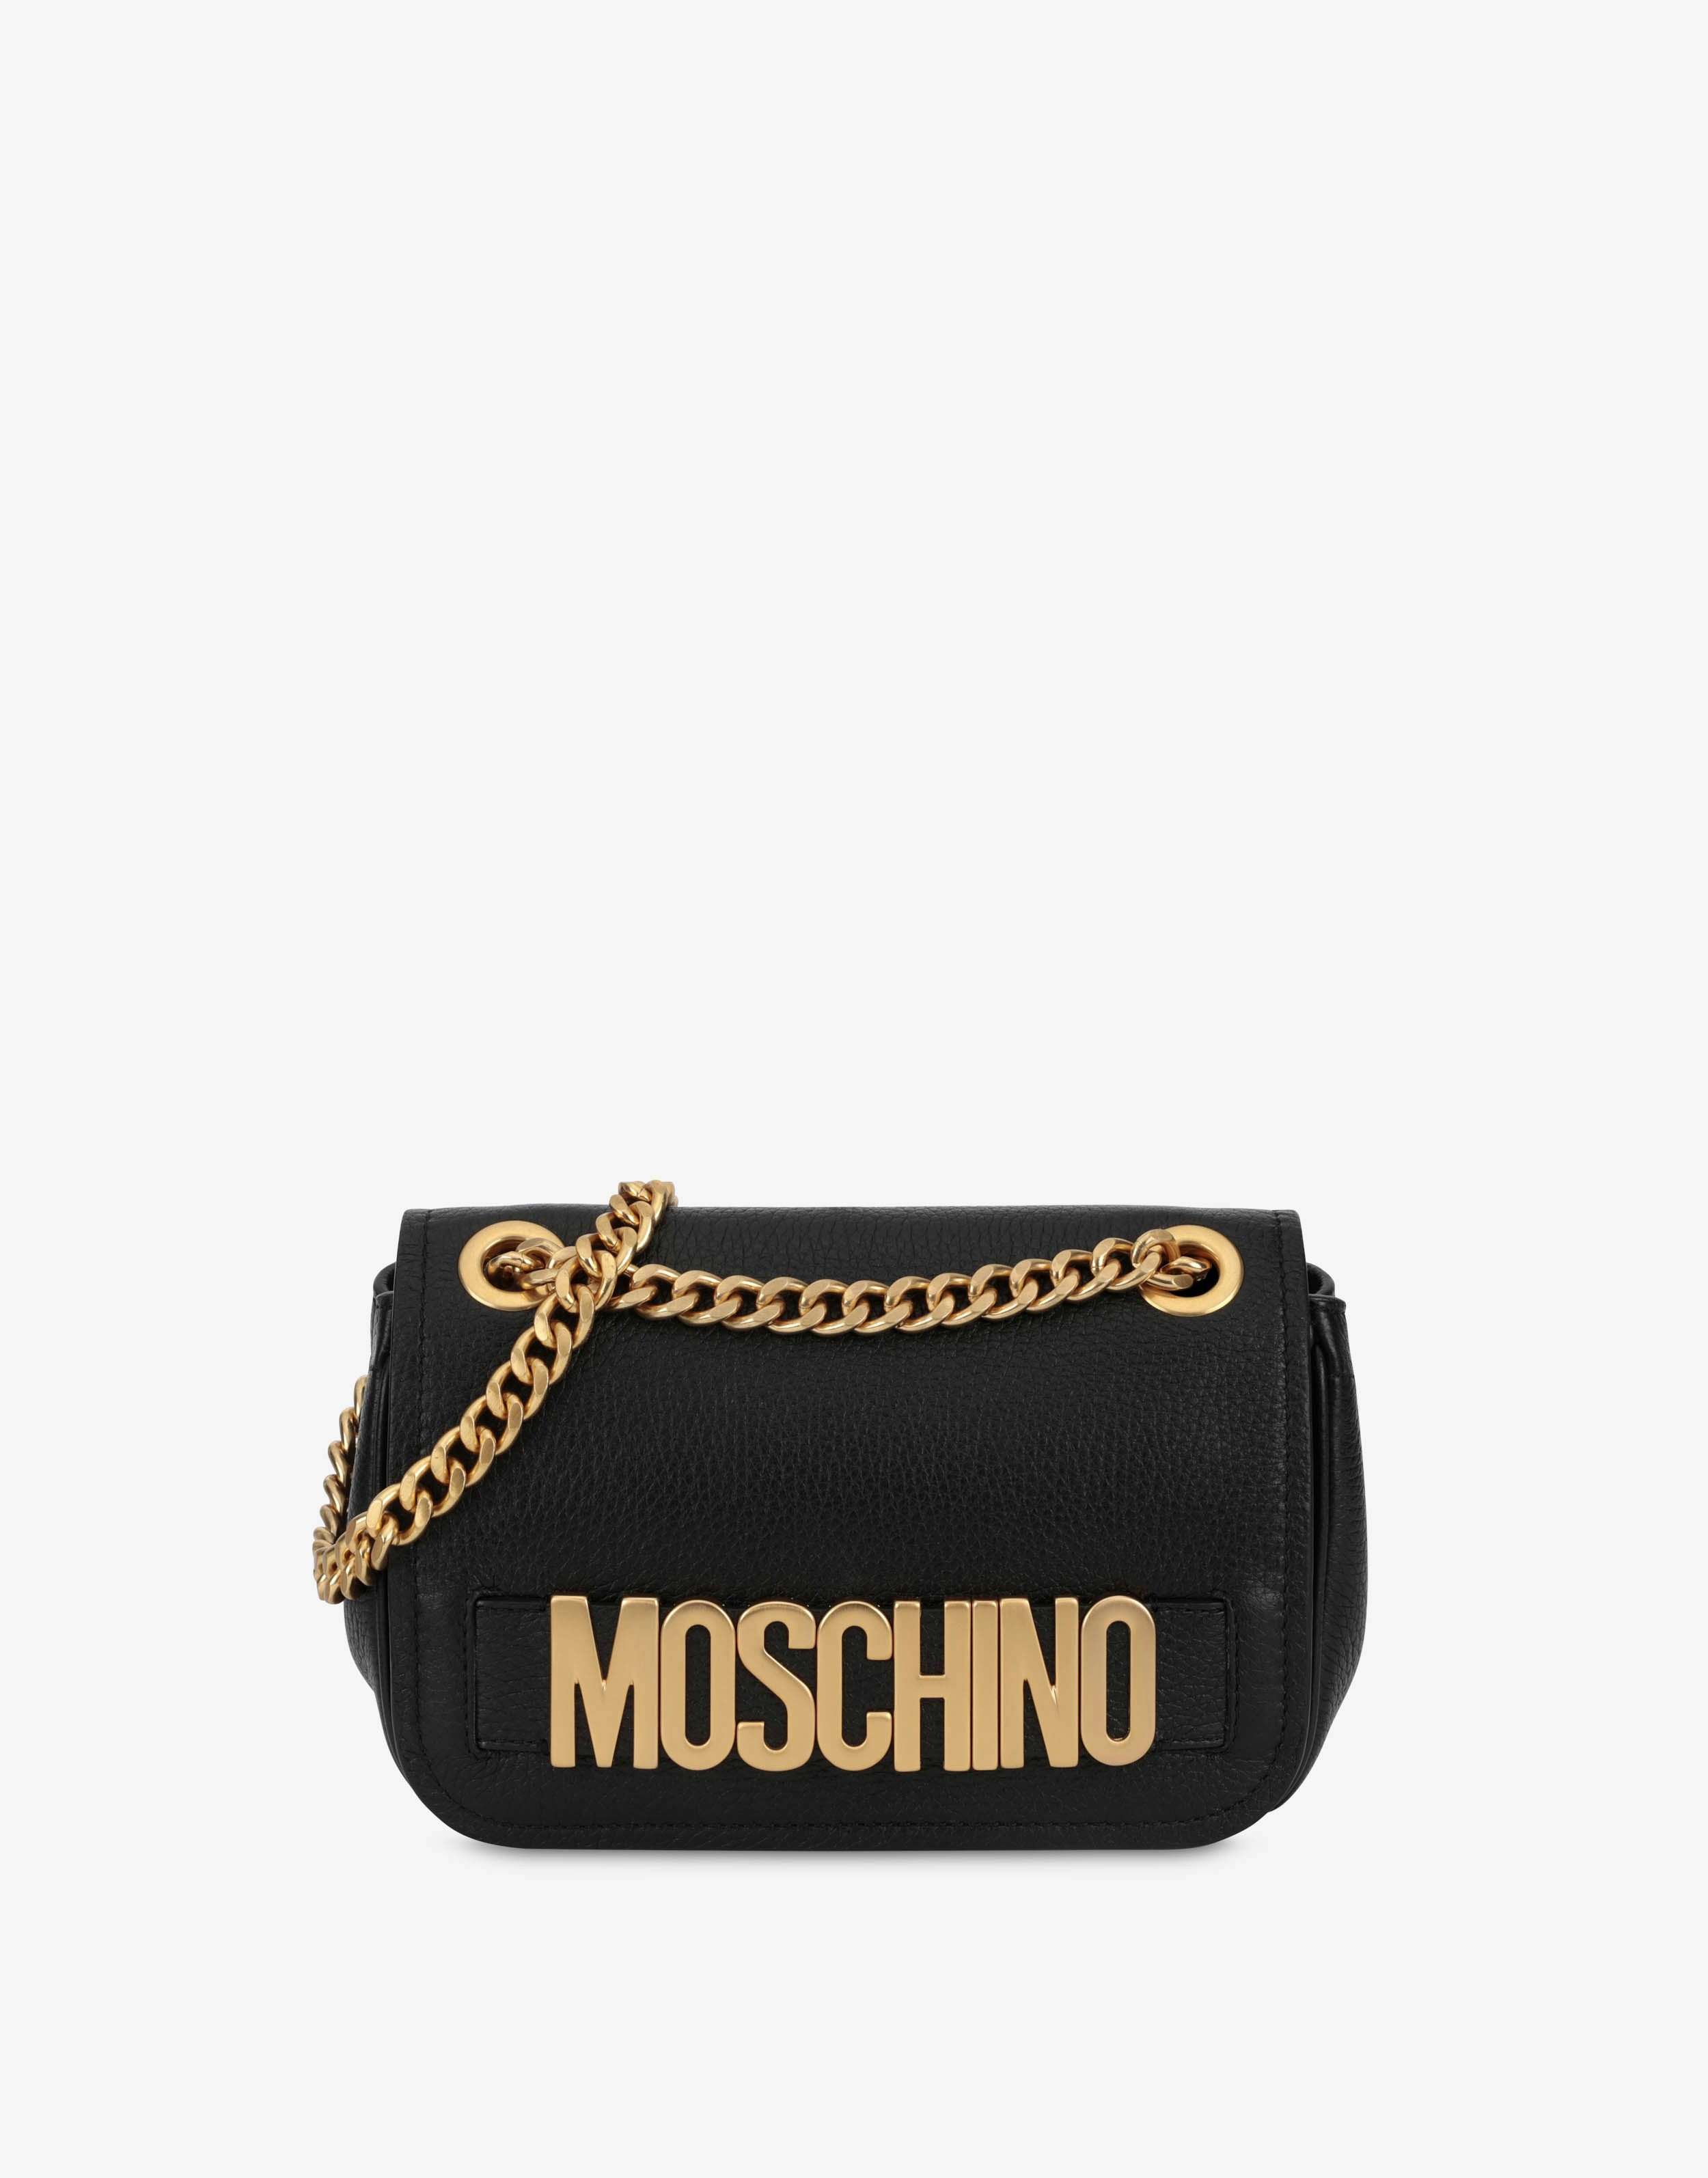 Moschino Borse Donna  Moschino Official Store